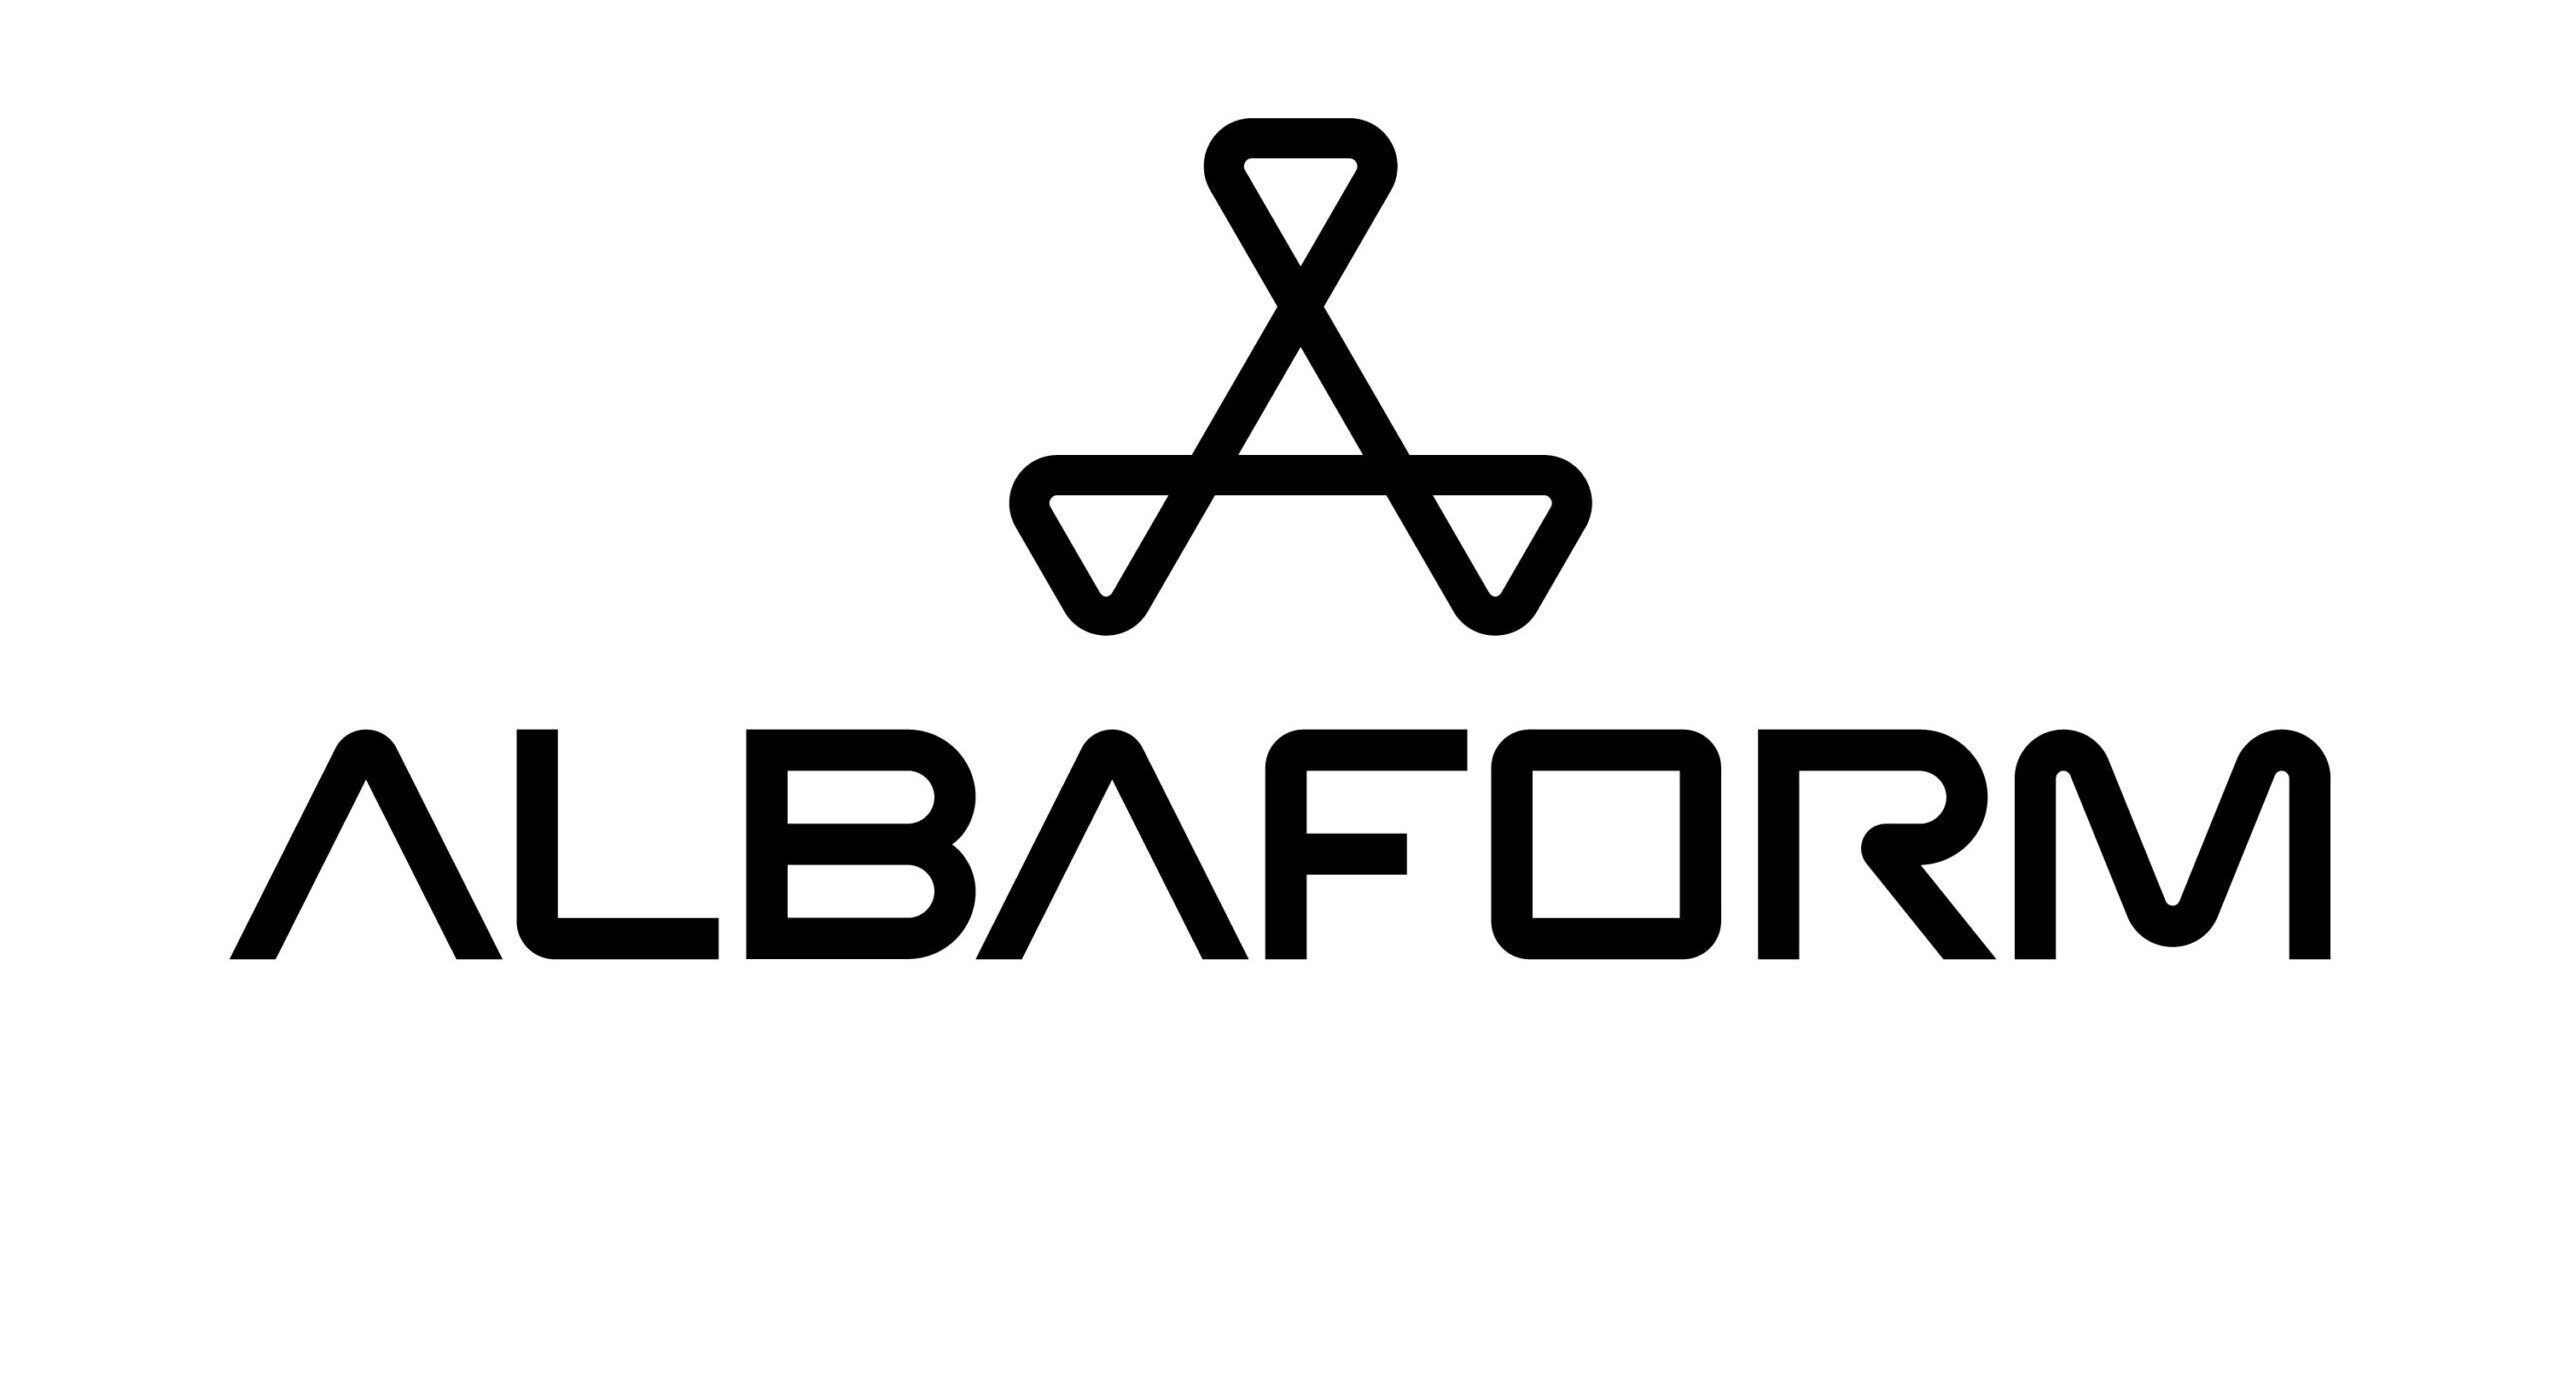 ALBAform Inc.